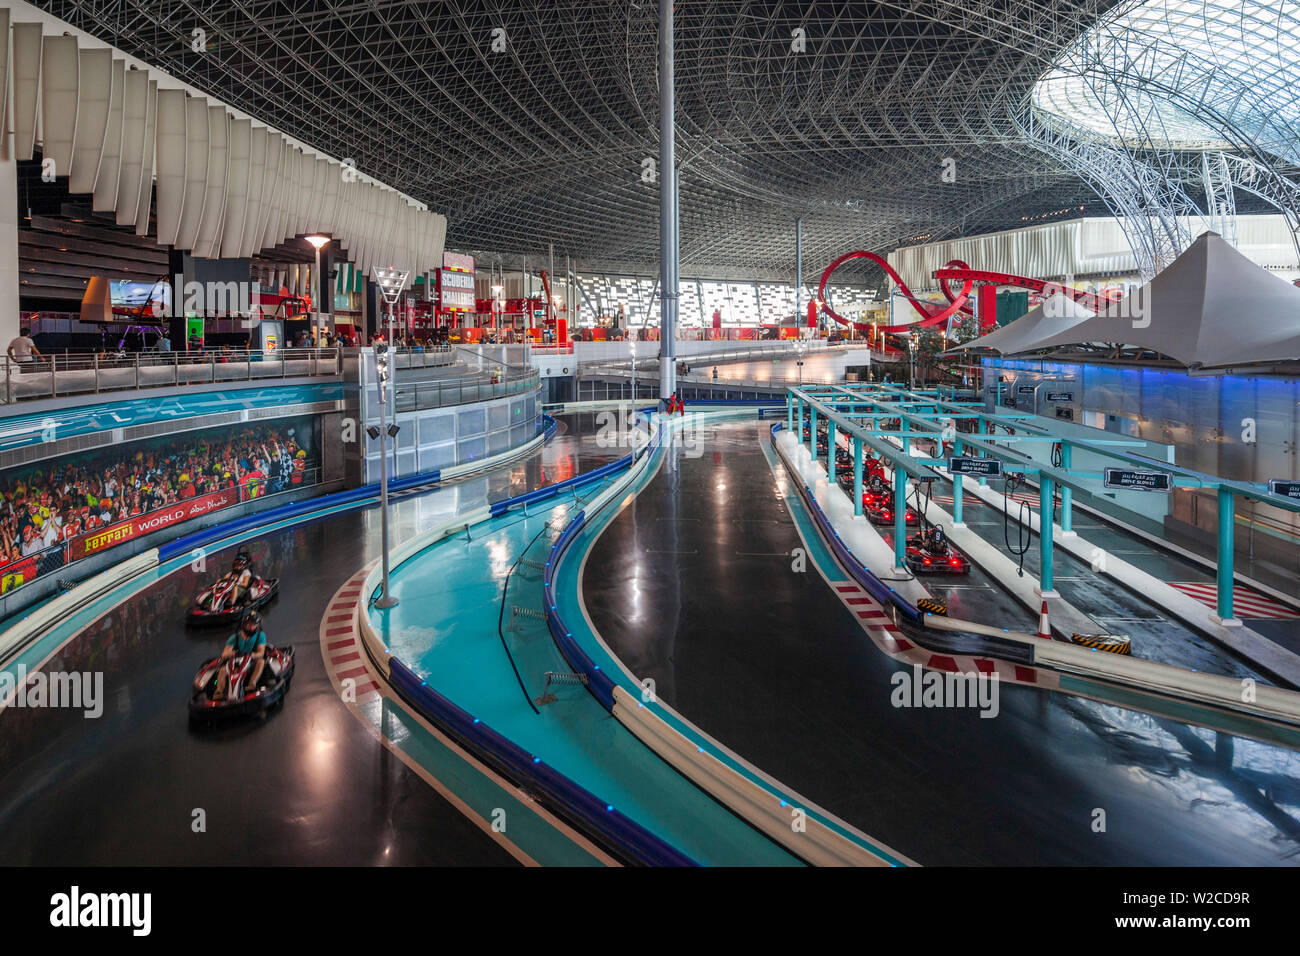 UAE, Abu Dhabi, Yas Island, Ferrari World Amusement Park, Karting Academy ride Stock Photo